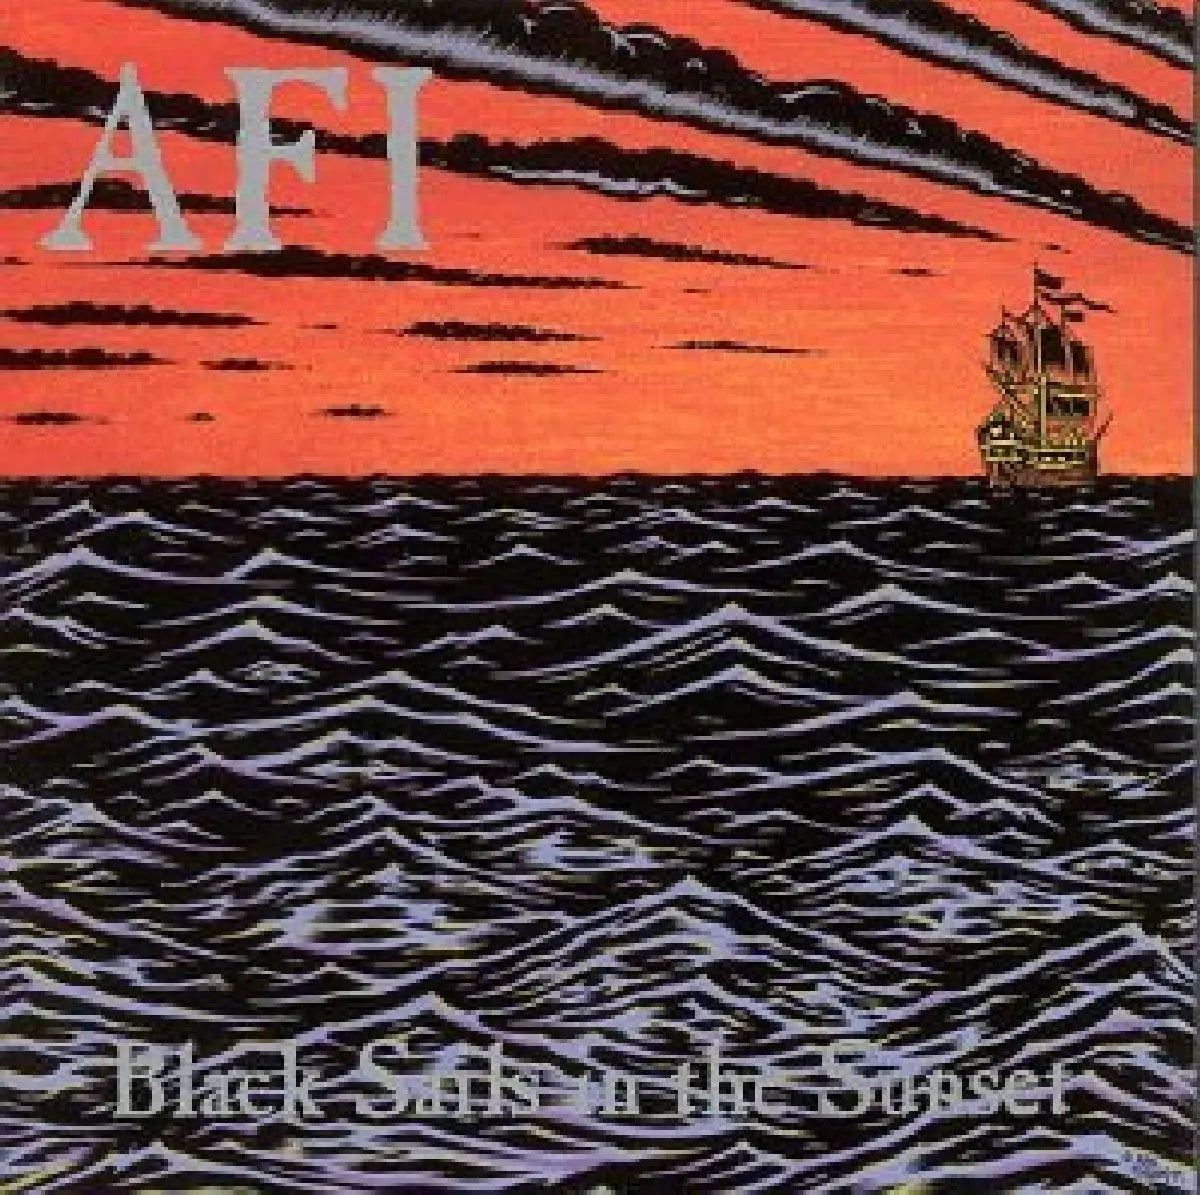 Afi - Black Sails In The Sunset [Vinyl LP]